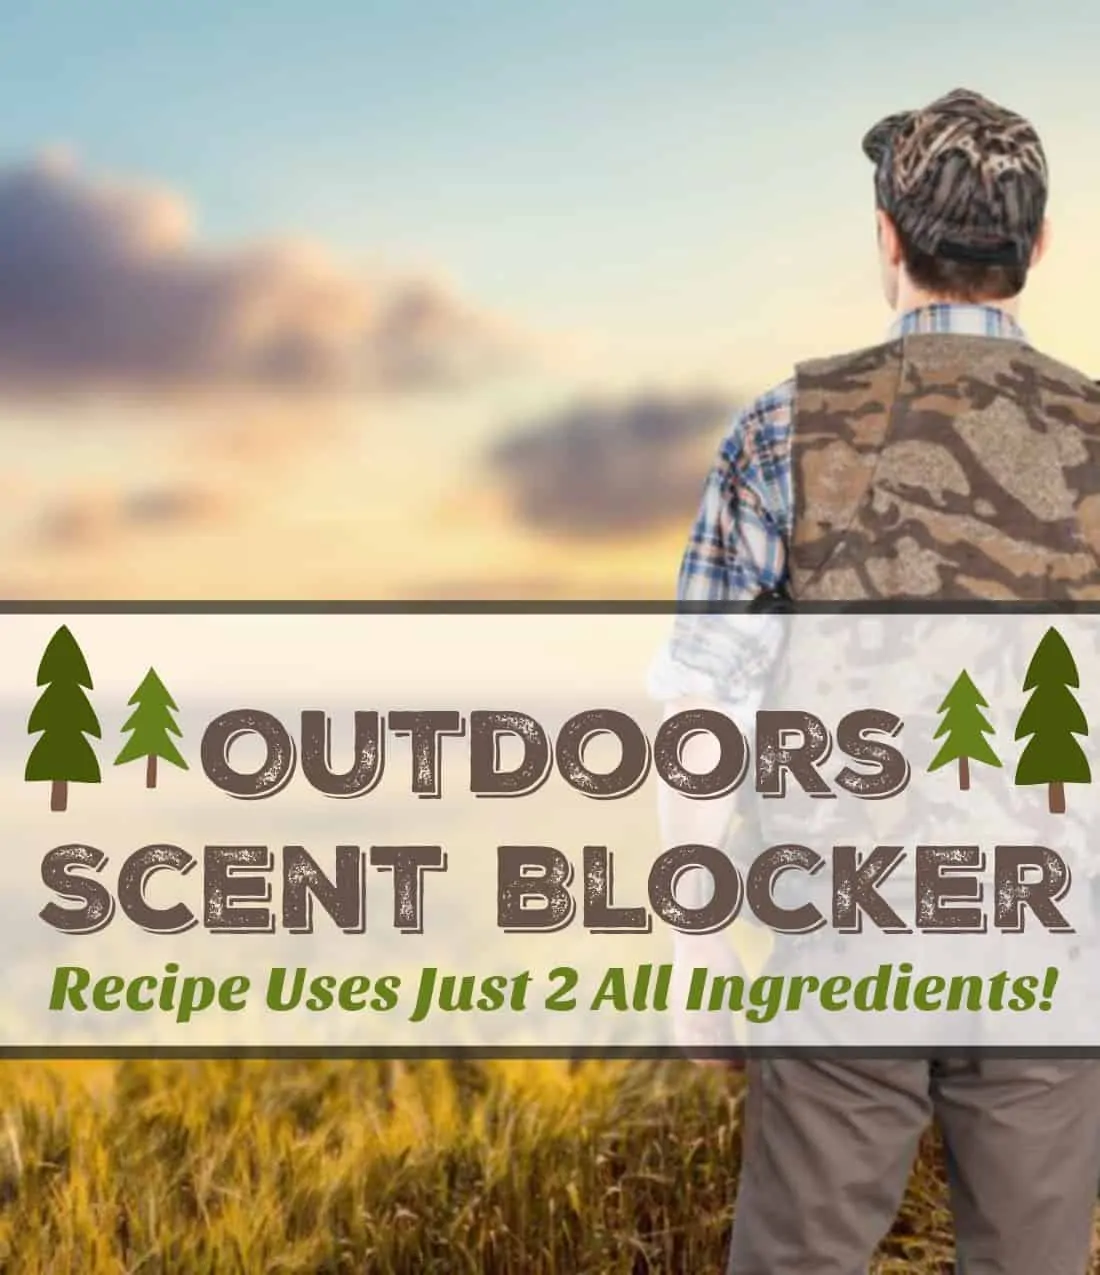 Outdoors scent blocker recipe using 2 ingredients.